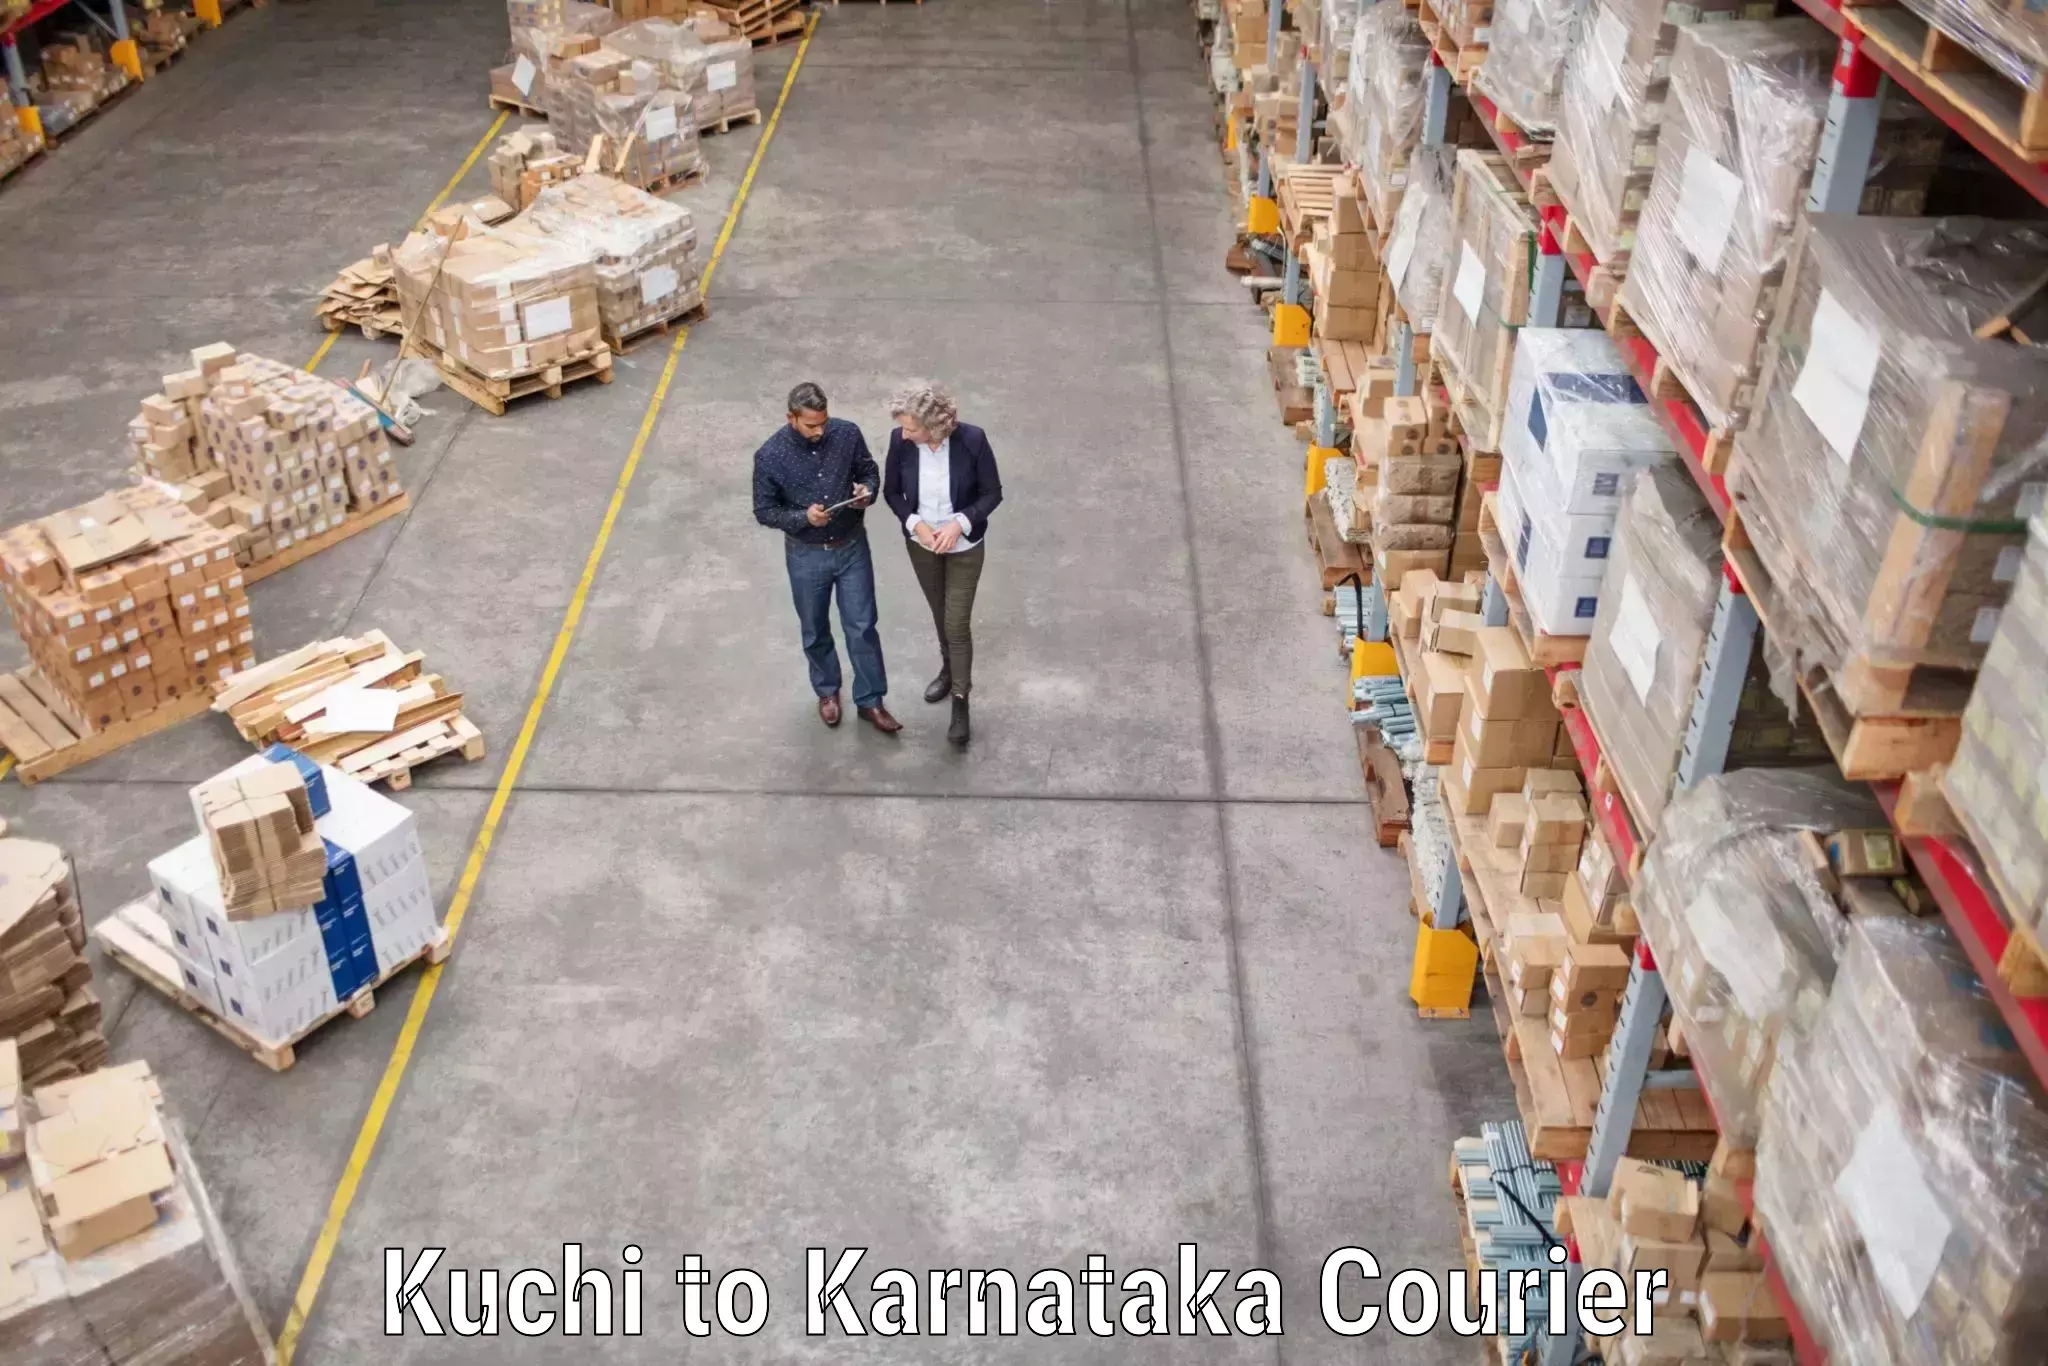 Furniture moving specialists Kuchi to Karnataka